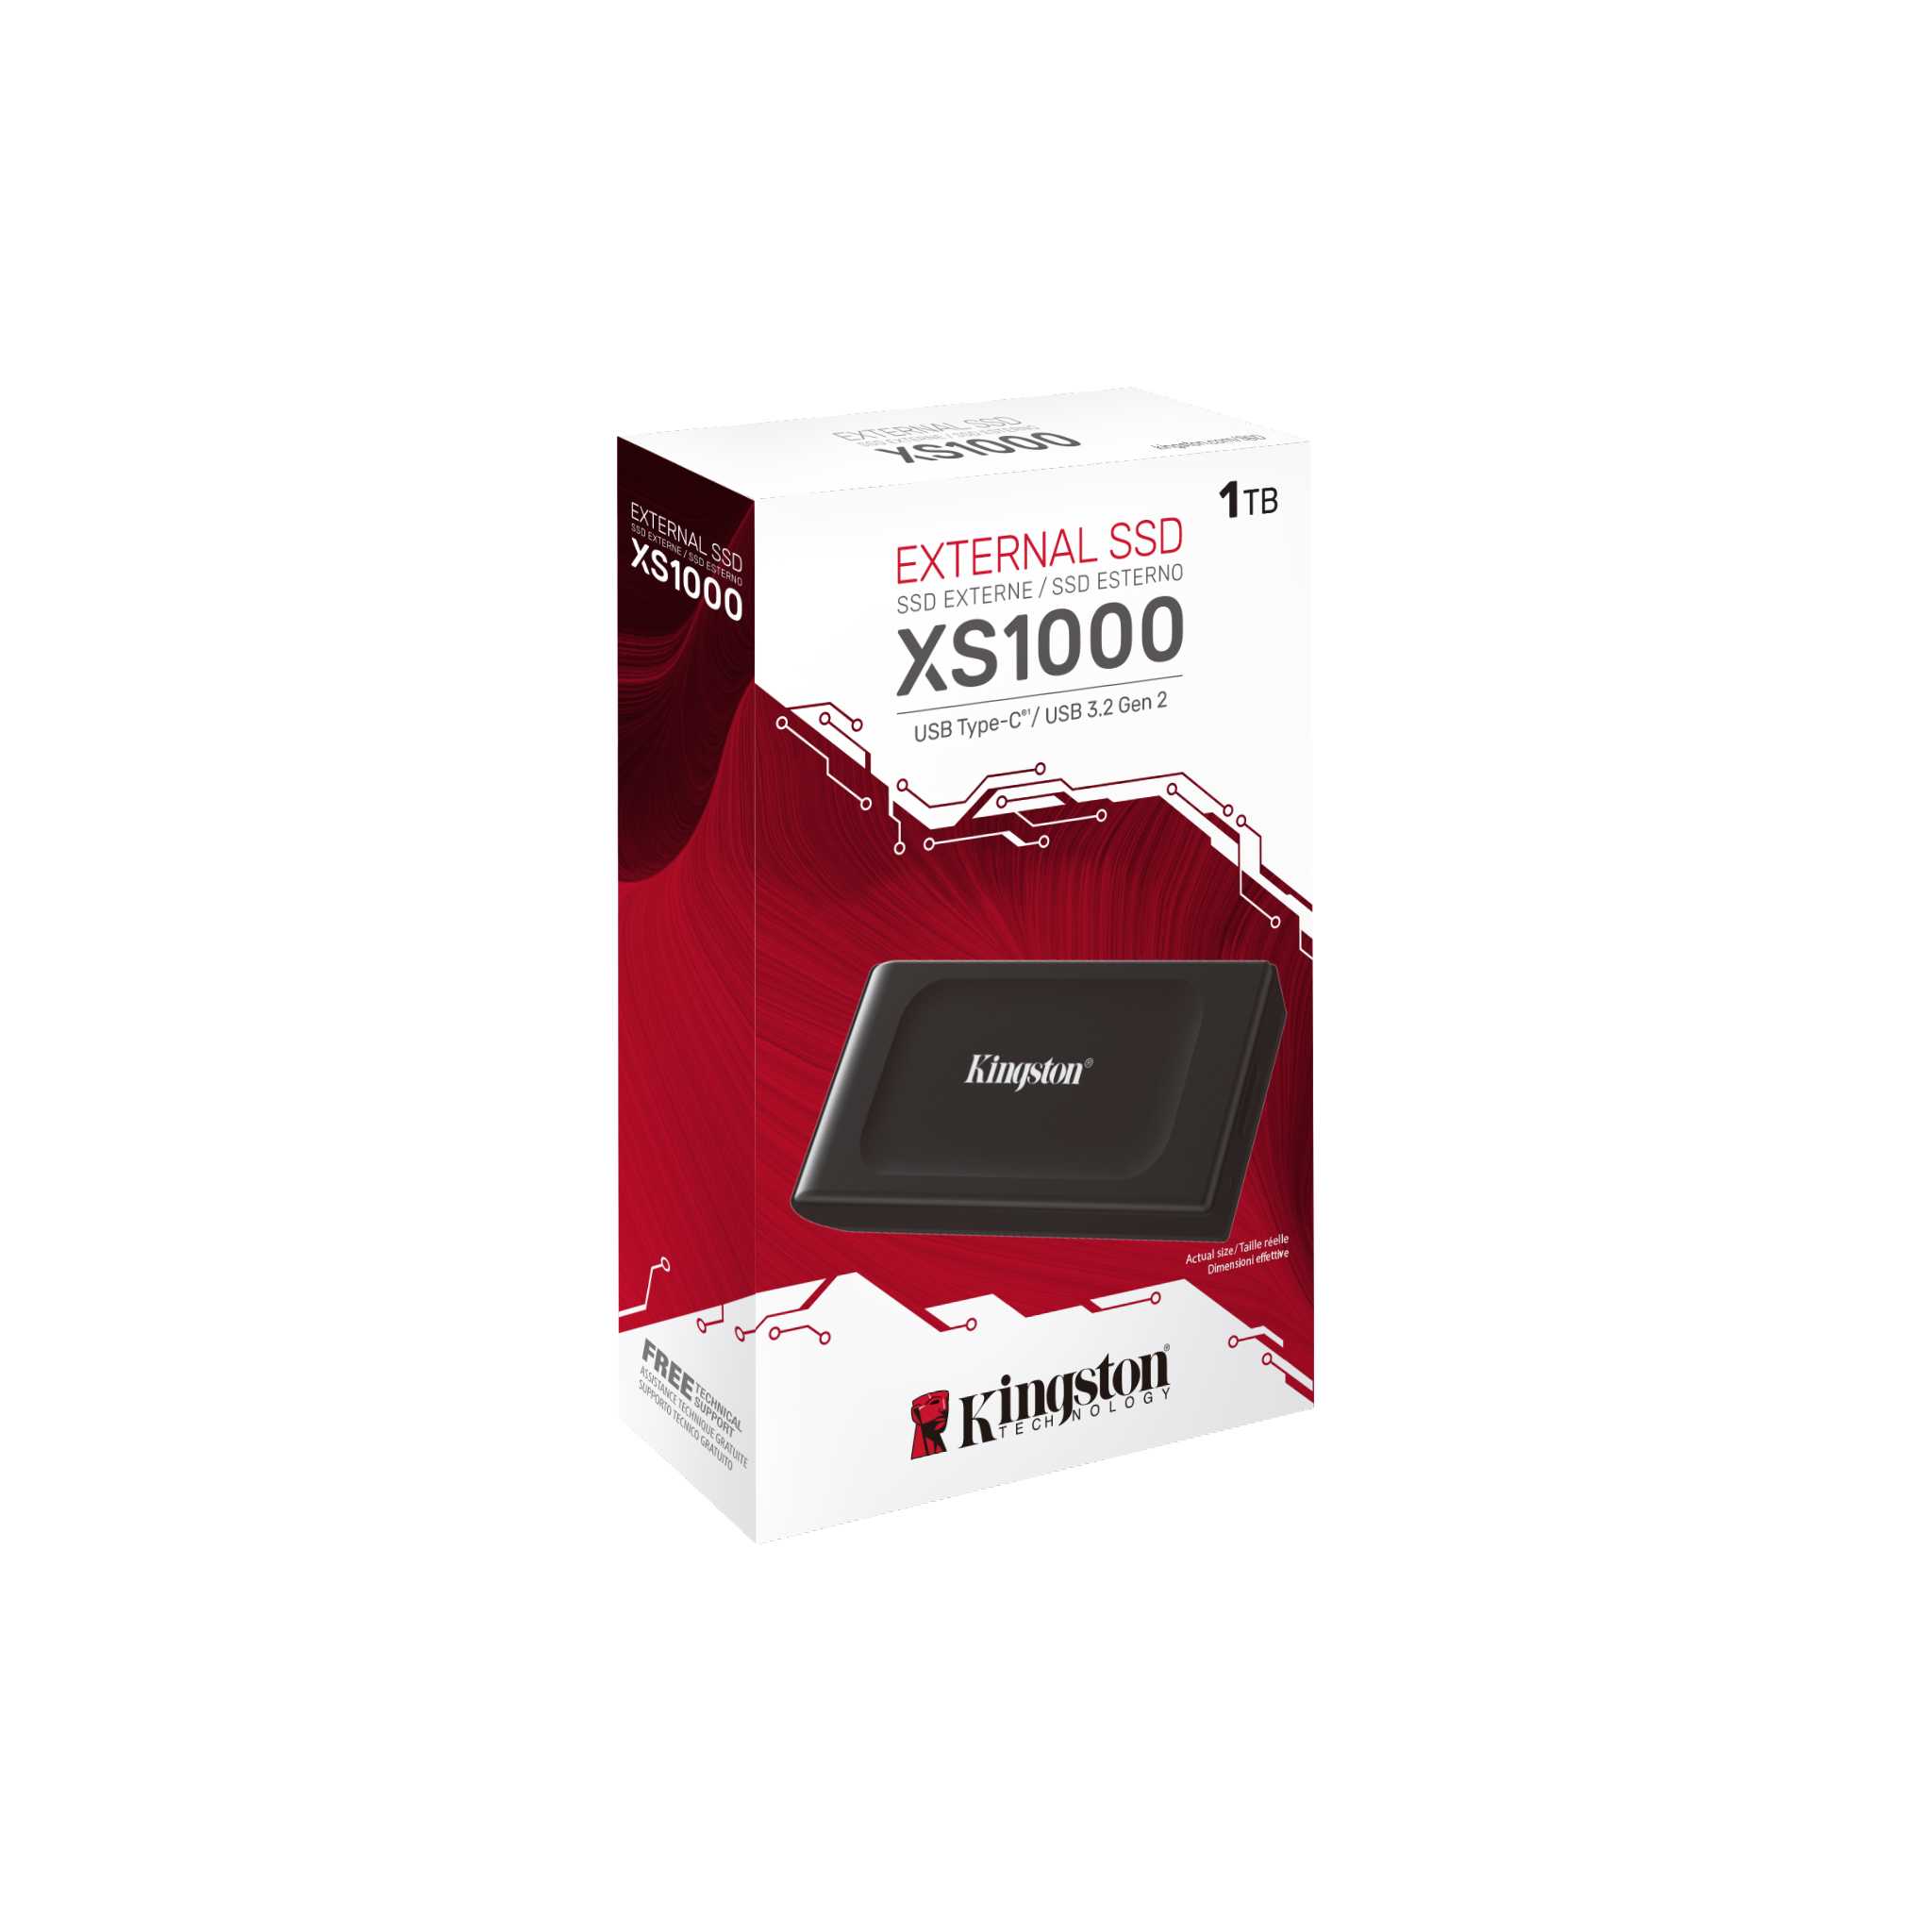 SSD Portatil USB 1TB Kingston XS1000 Tipo C